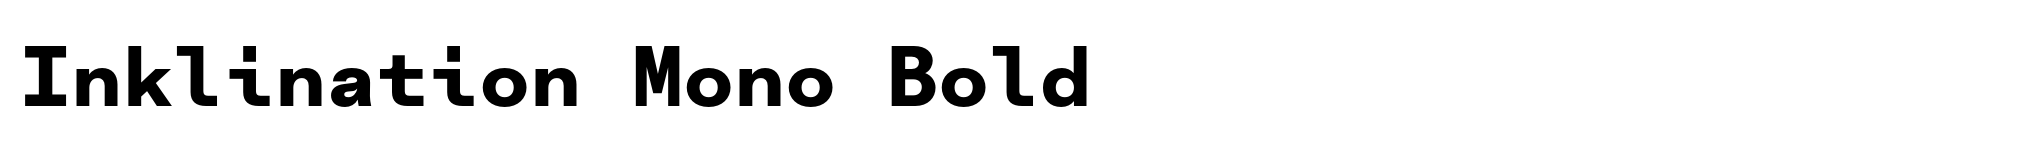 Inklination Mono Bold image